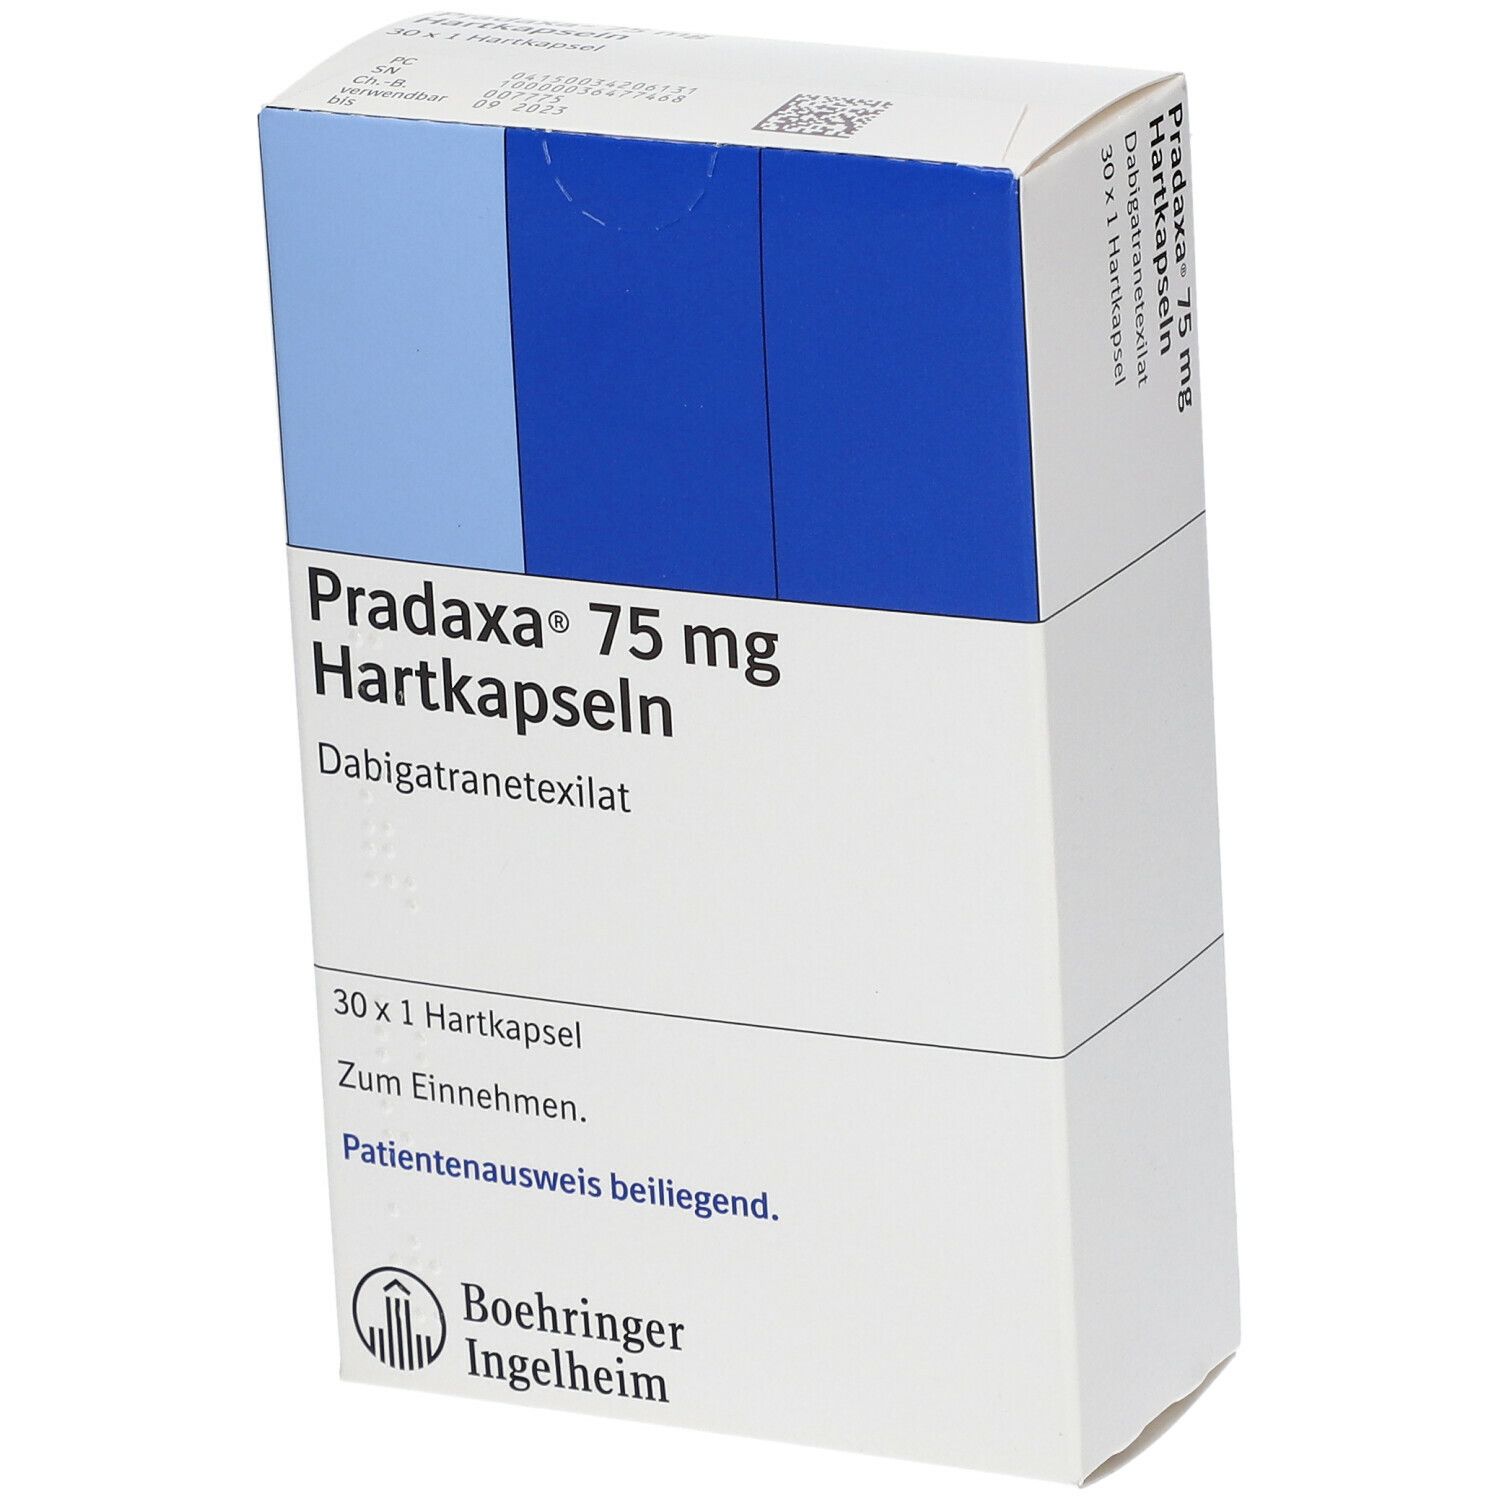 Pradaxa® 75 mg